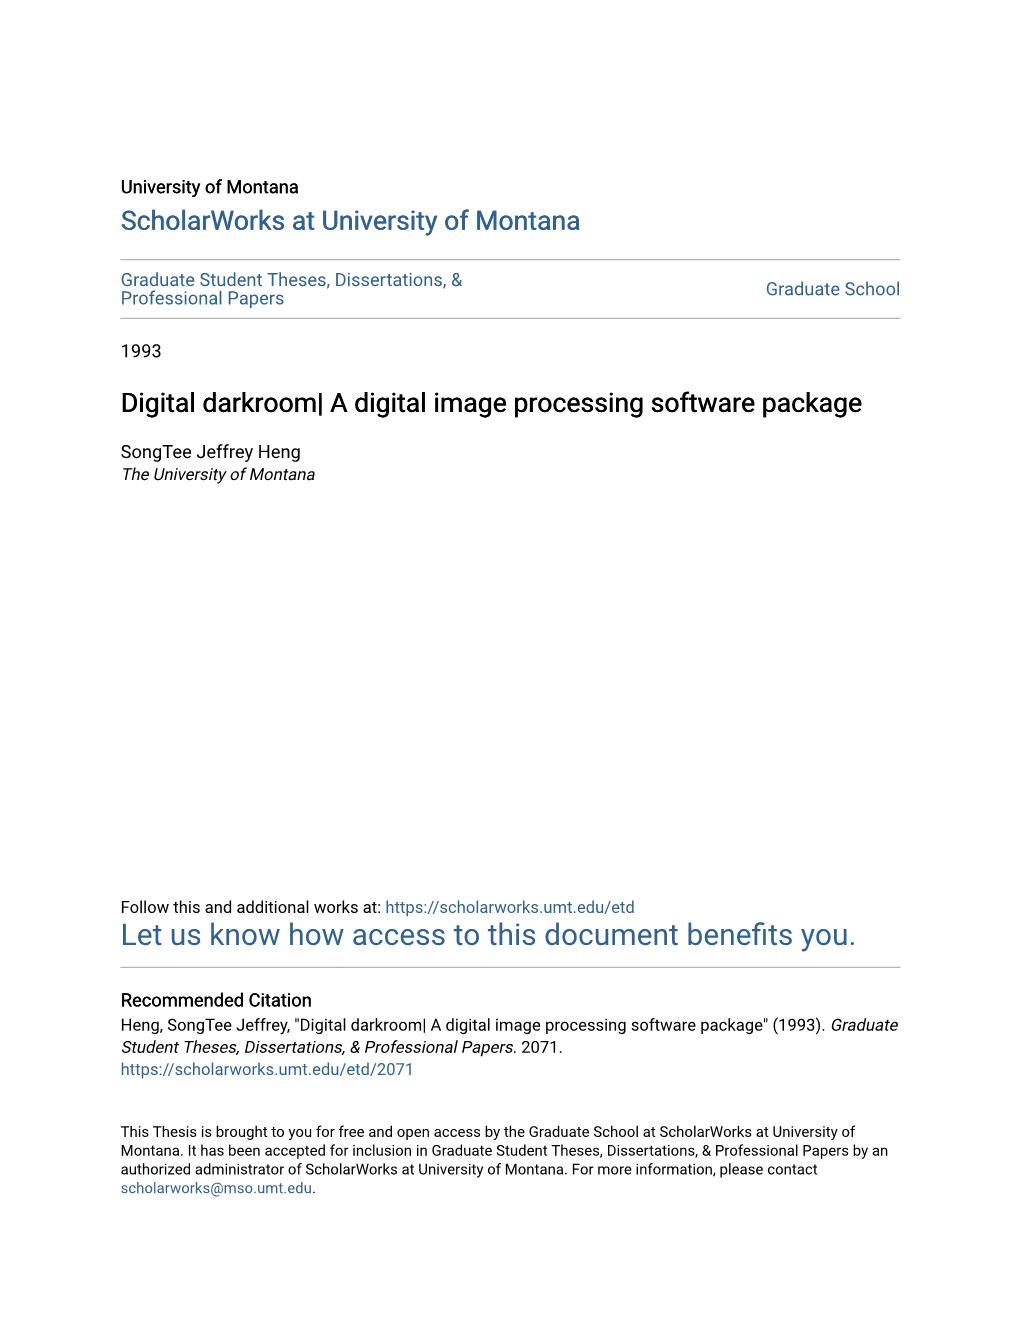 Digital Darkroom| a Digital Image Processing Software Package